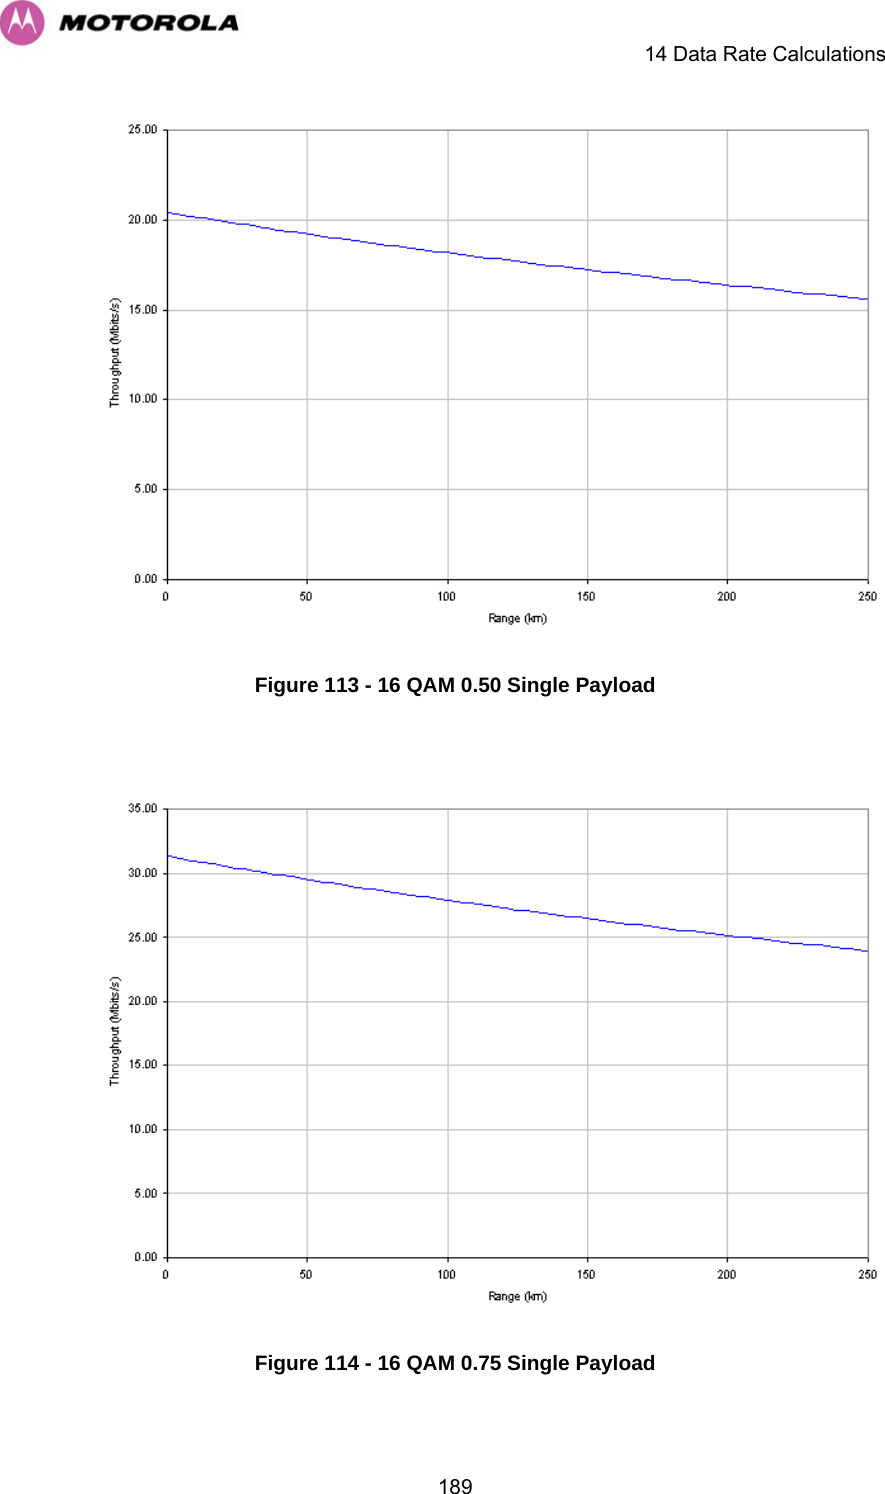     14 Data Rate Calculations  189 Figure 113 - 16 QAM 0.50 Single Payload   Figure 114 - 16 QAM 0.75 Single Payload 